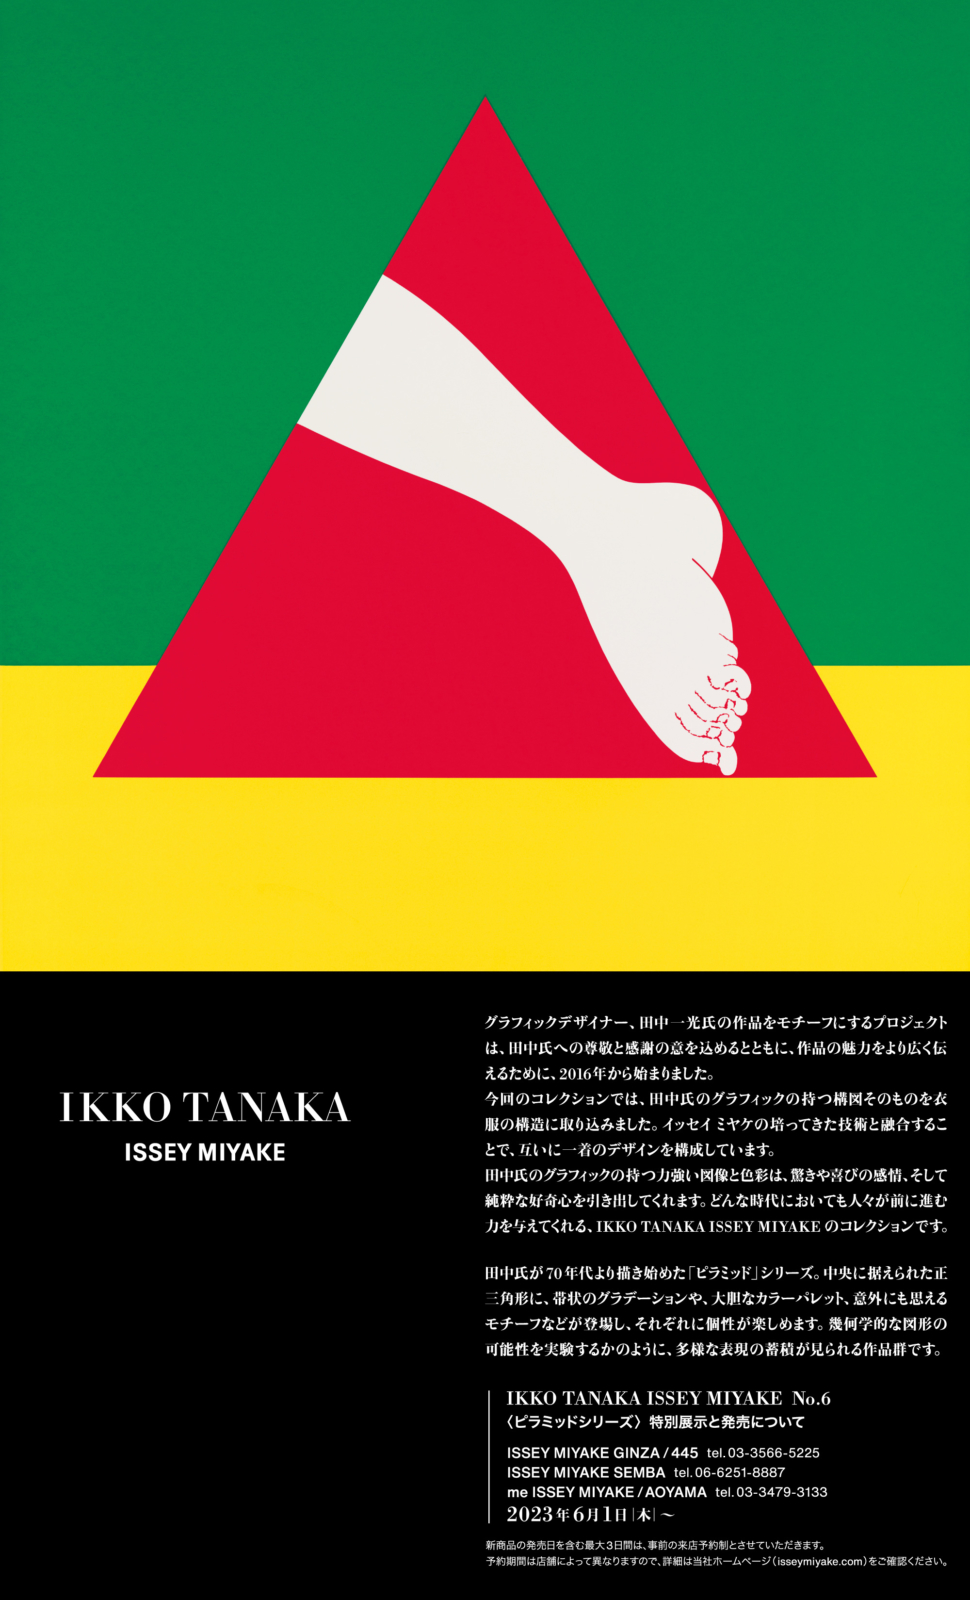 IKKO TANAKA ISSEY MIYAKE No.6 Special Installation［The pyramid